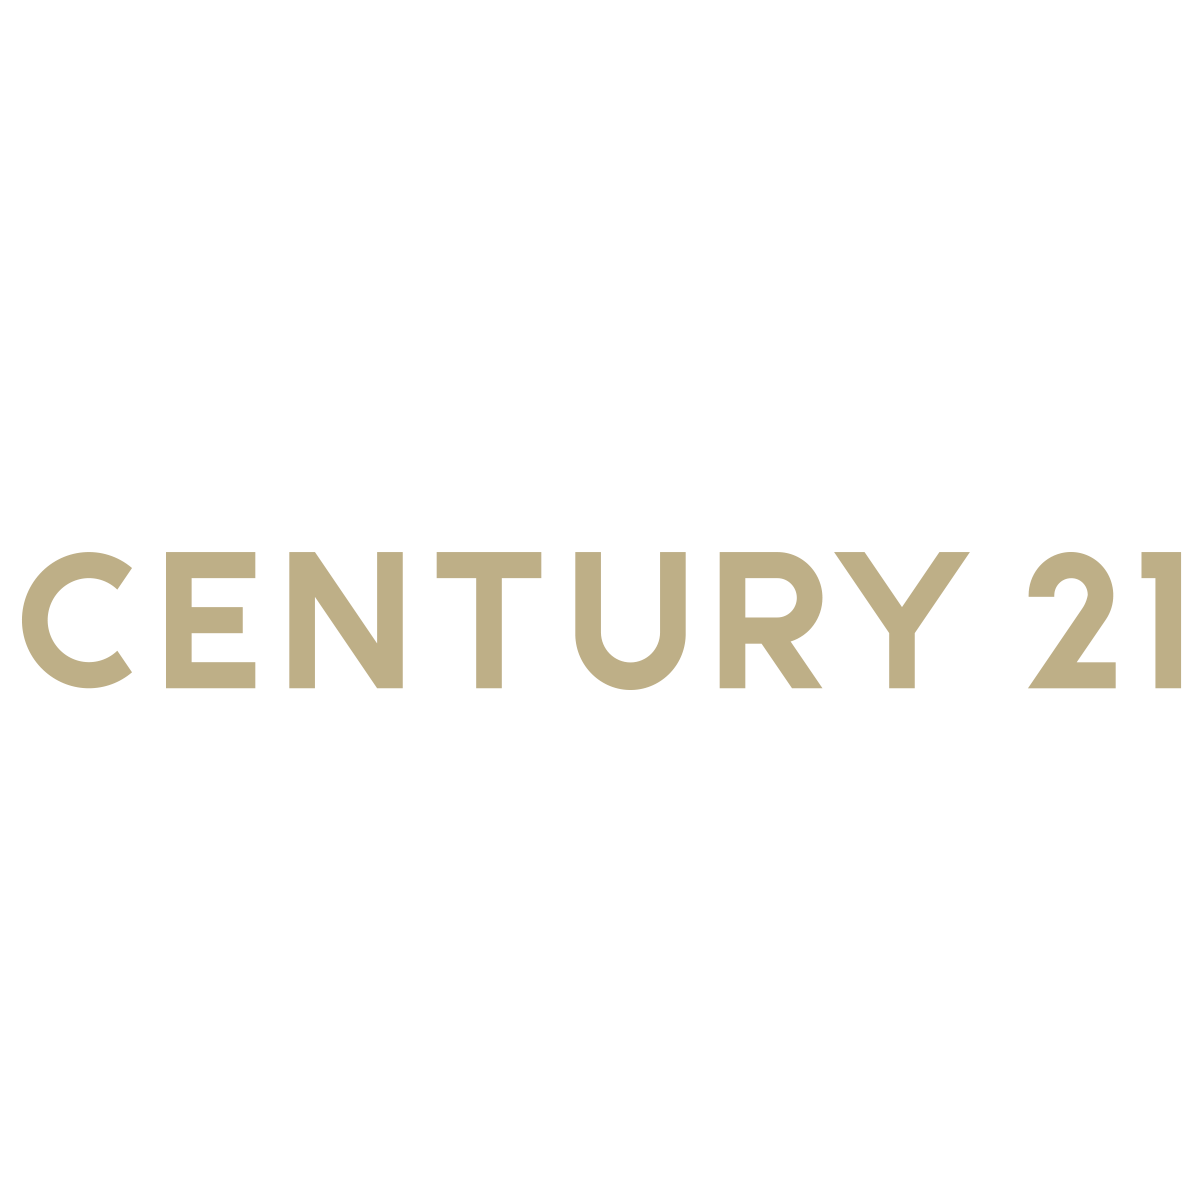 century 21 red bottoms